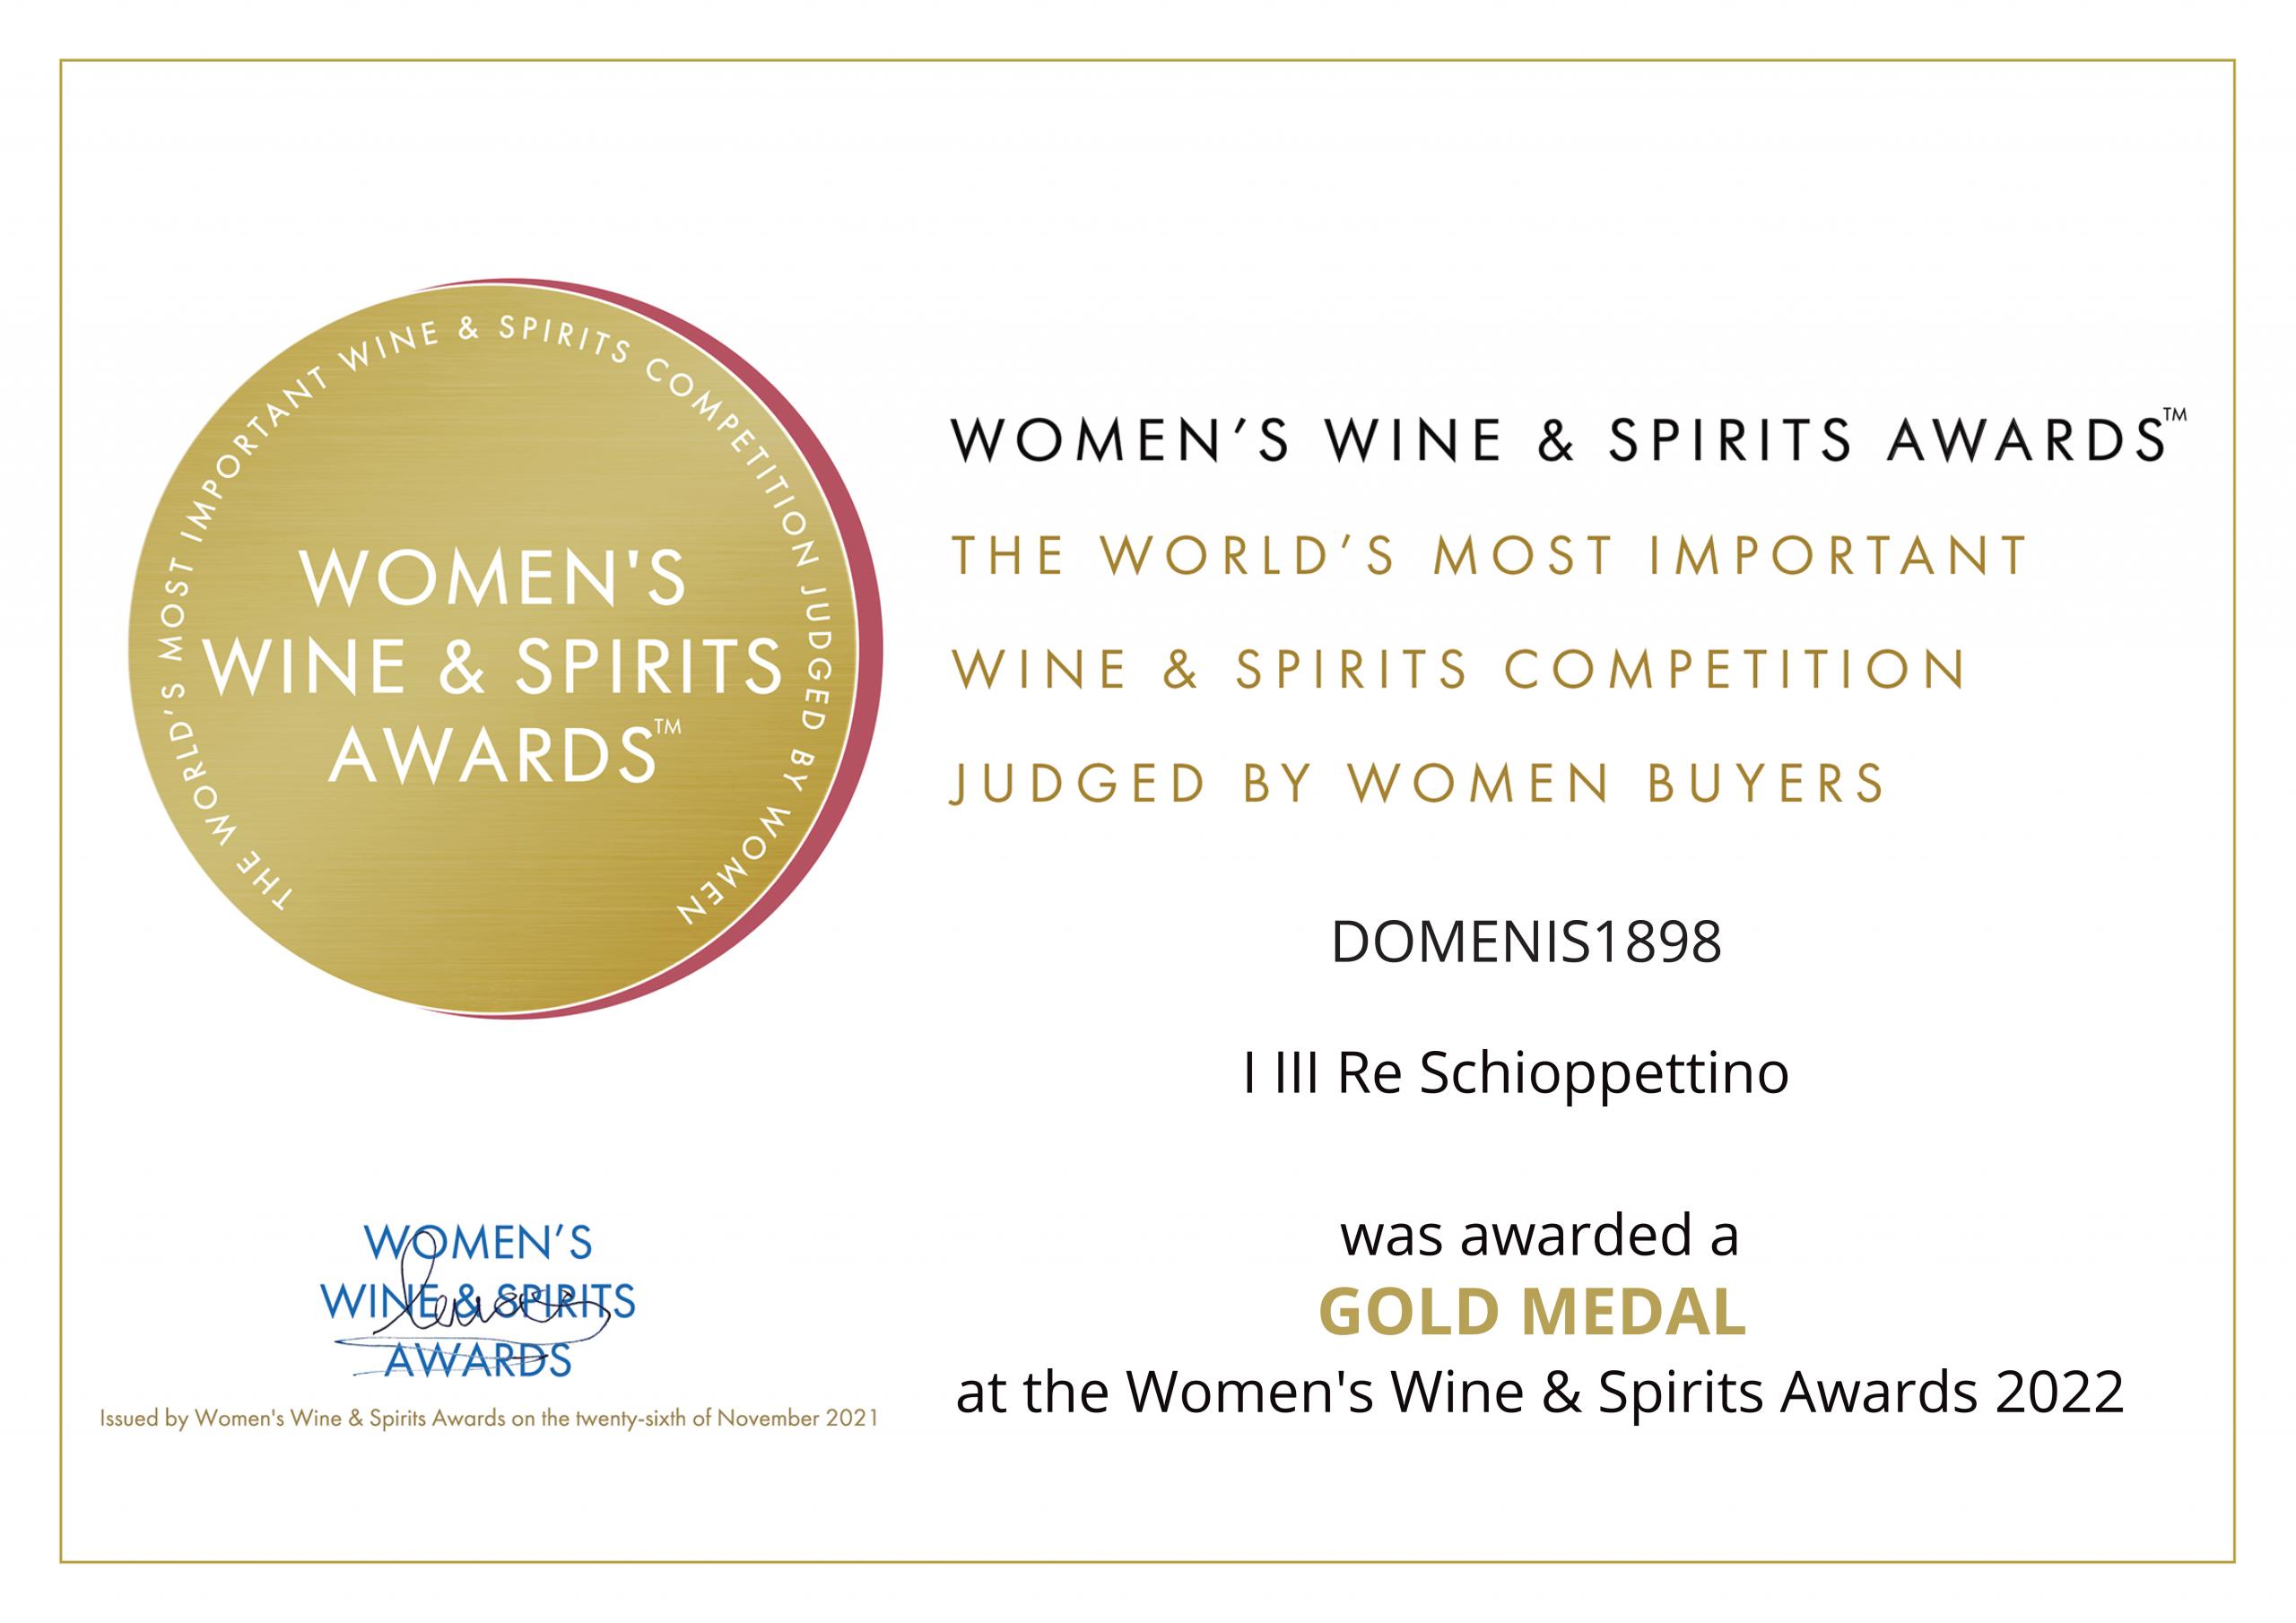 Women’s Wine & Spirit Awards 2022 – Gold Medal – I III Re Schioppettino